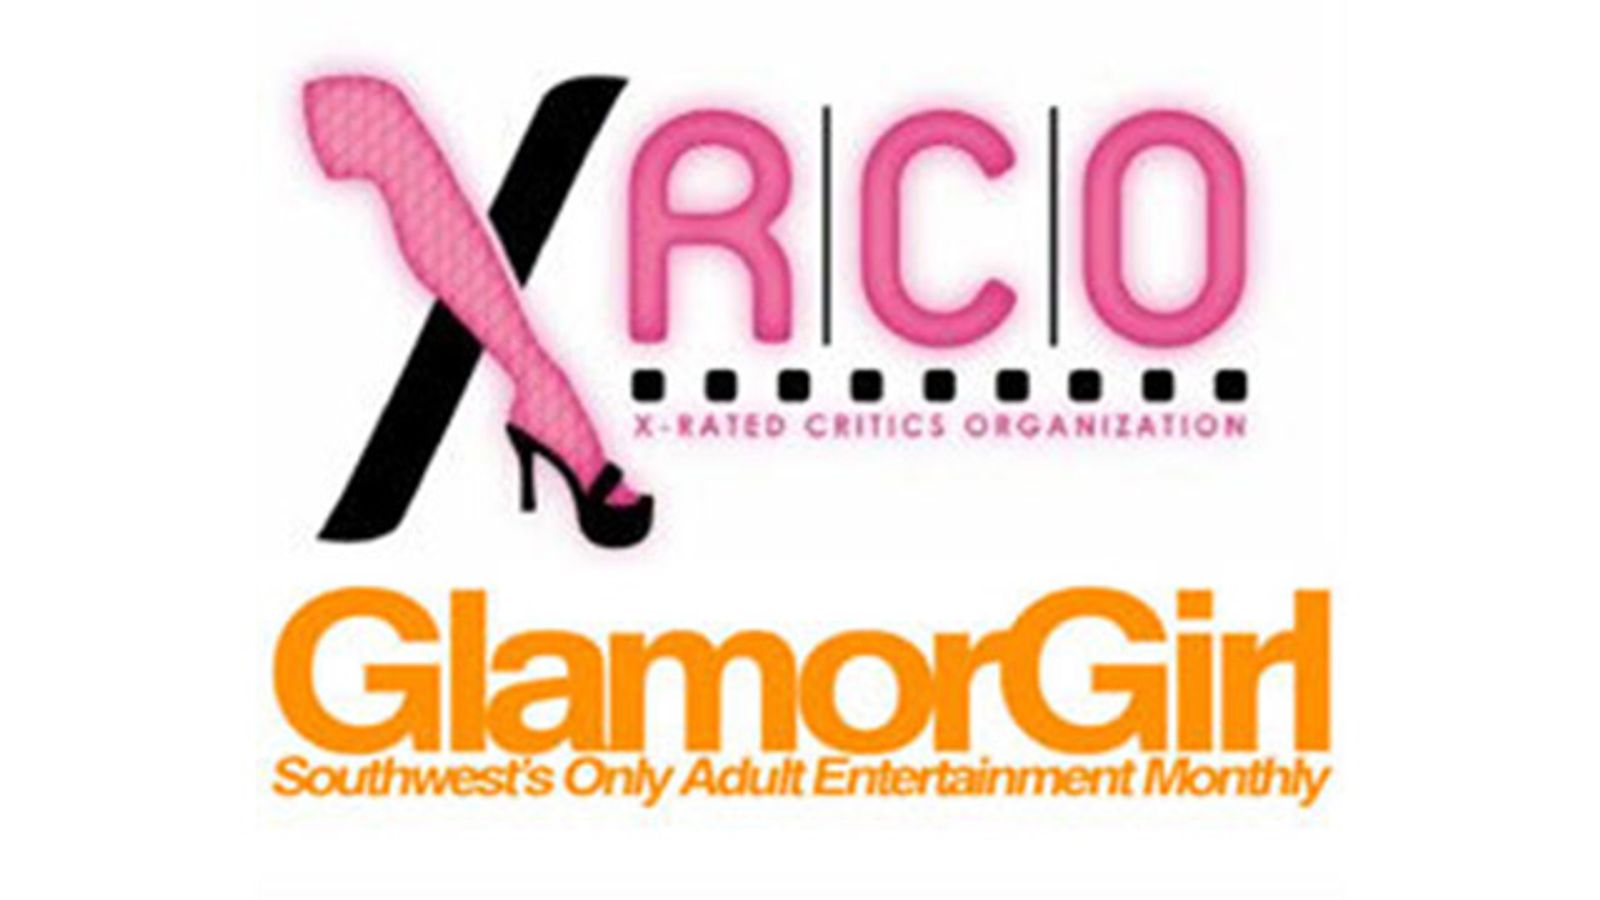 GlamorGirl Mag Becomes Official Sponsor of 2015 XRCO Awards